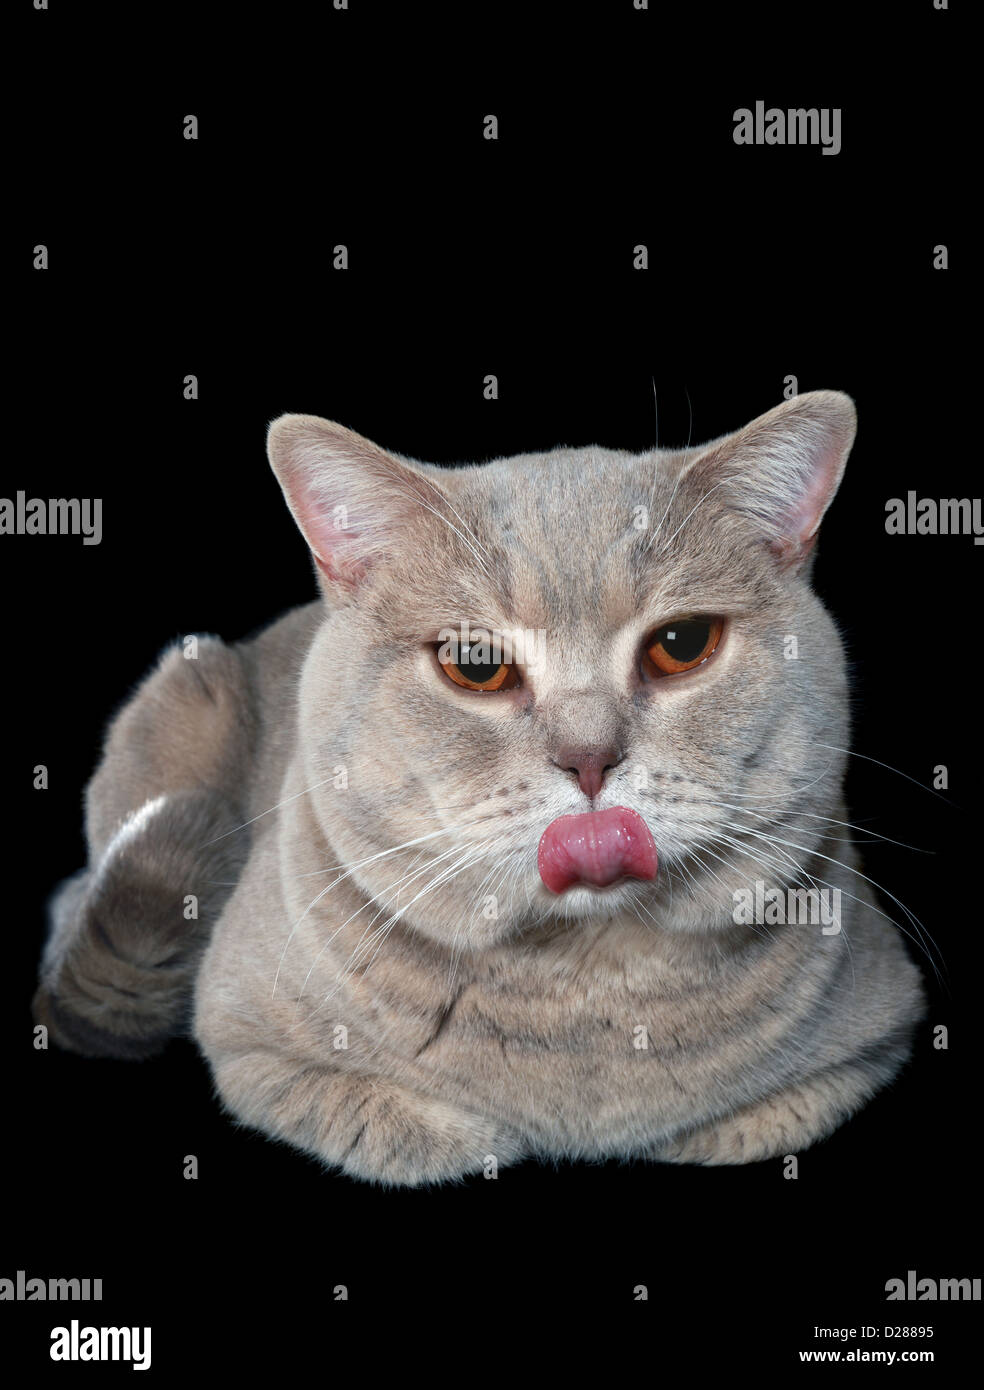 Deridono British Shorthair Cat isolati su sfondo nero Foto Stock